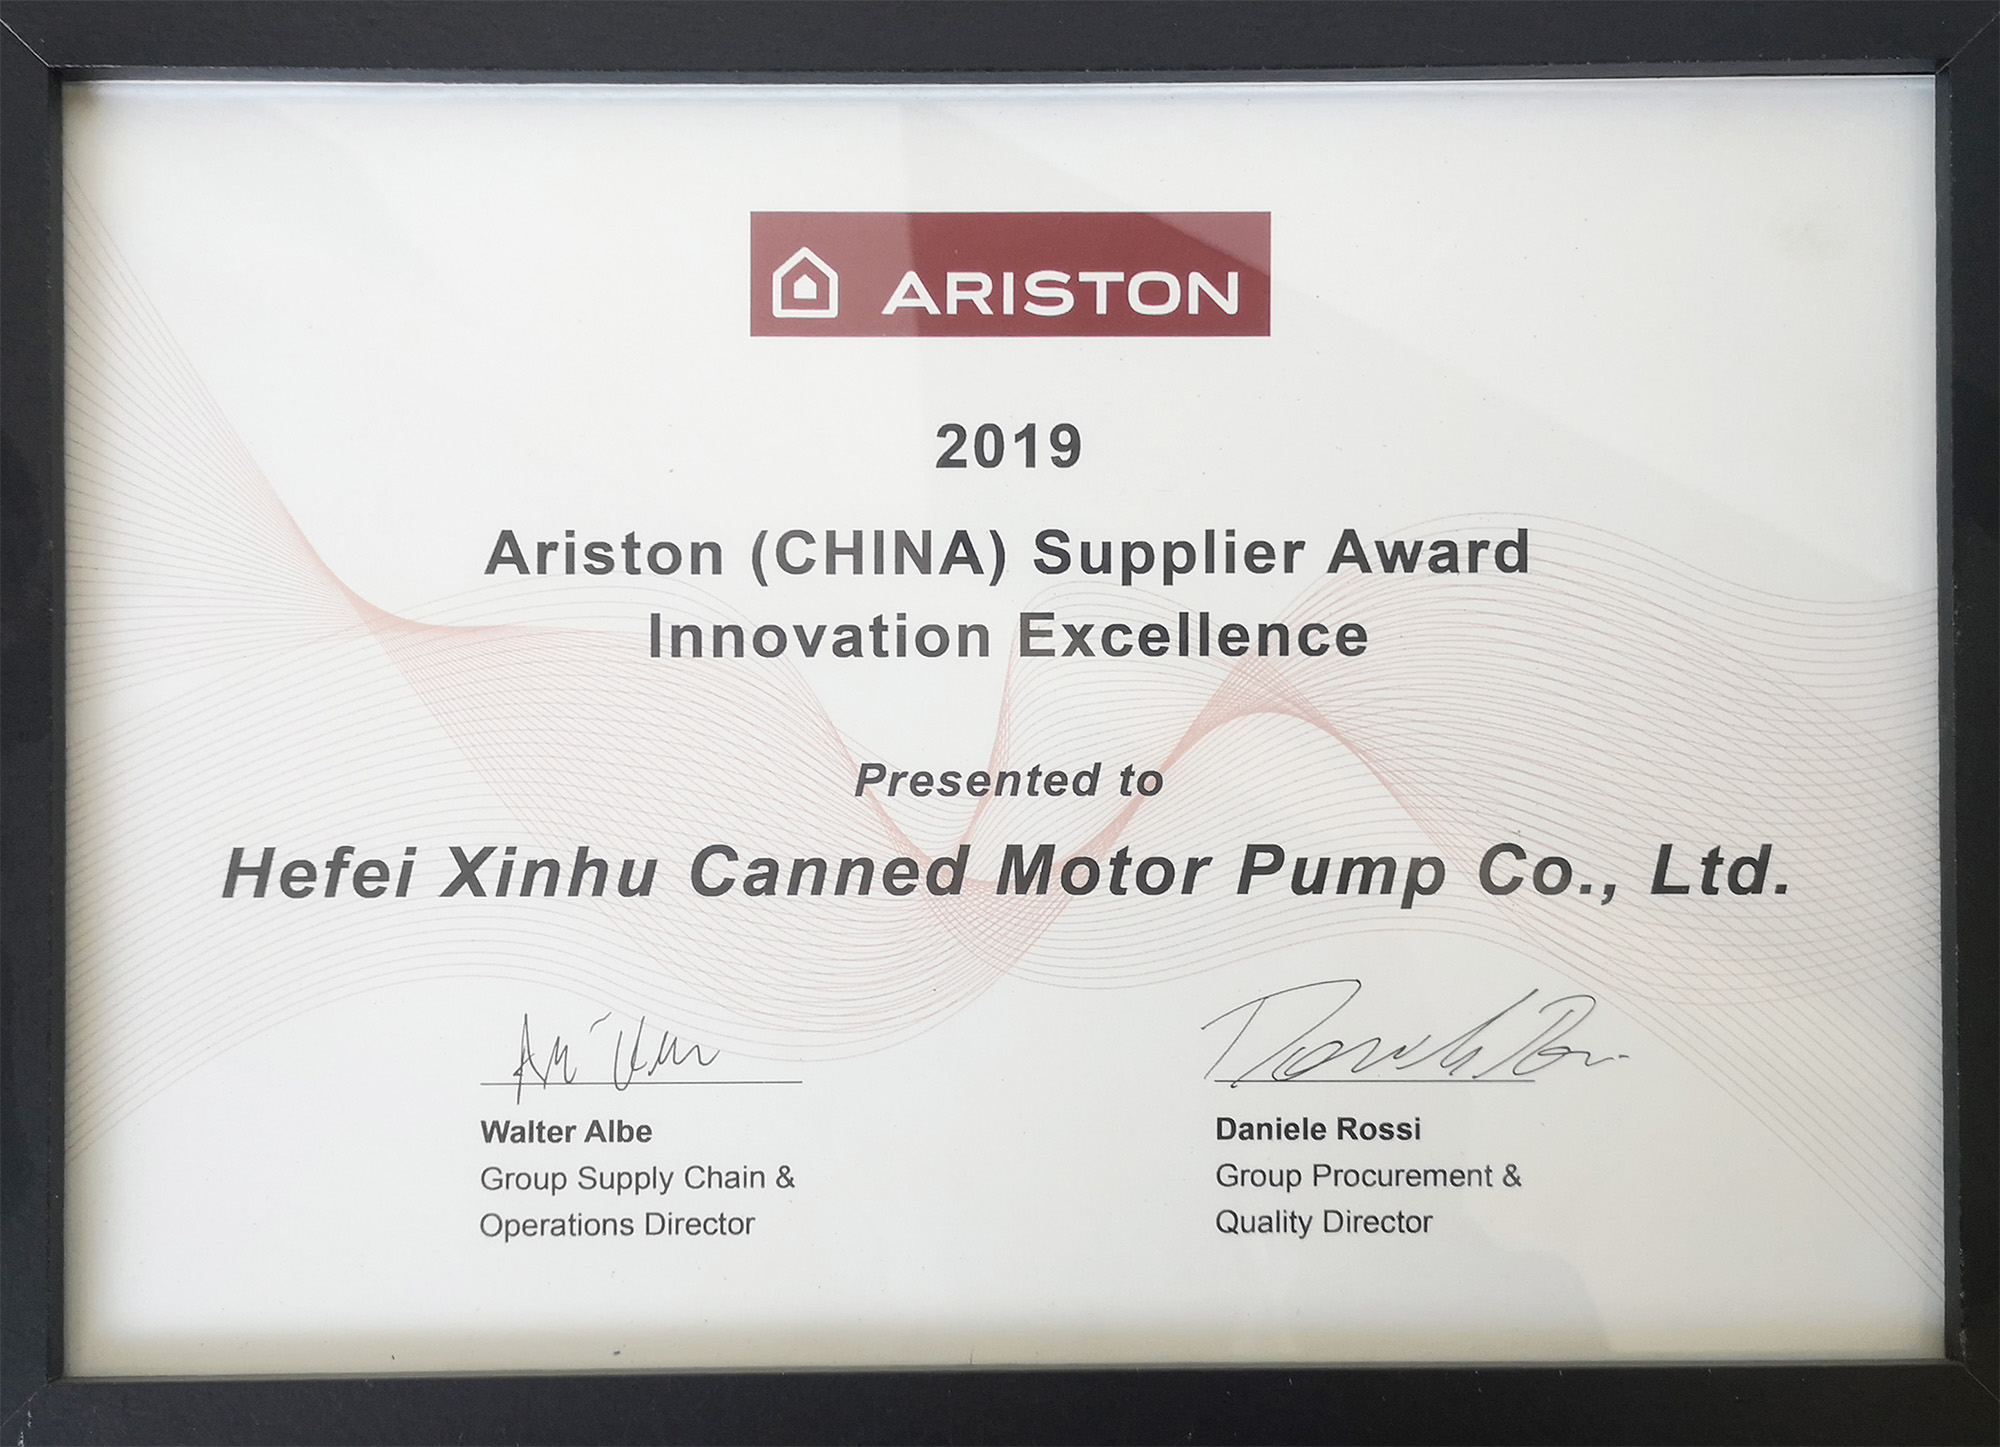 #Ariston Supplier Award Innovation Excellence